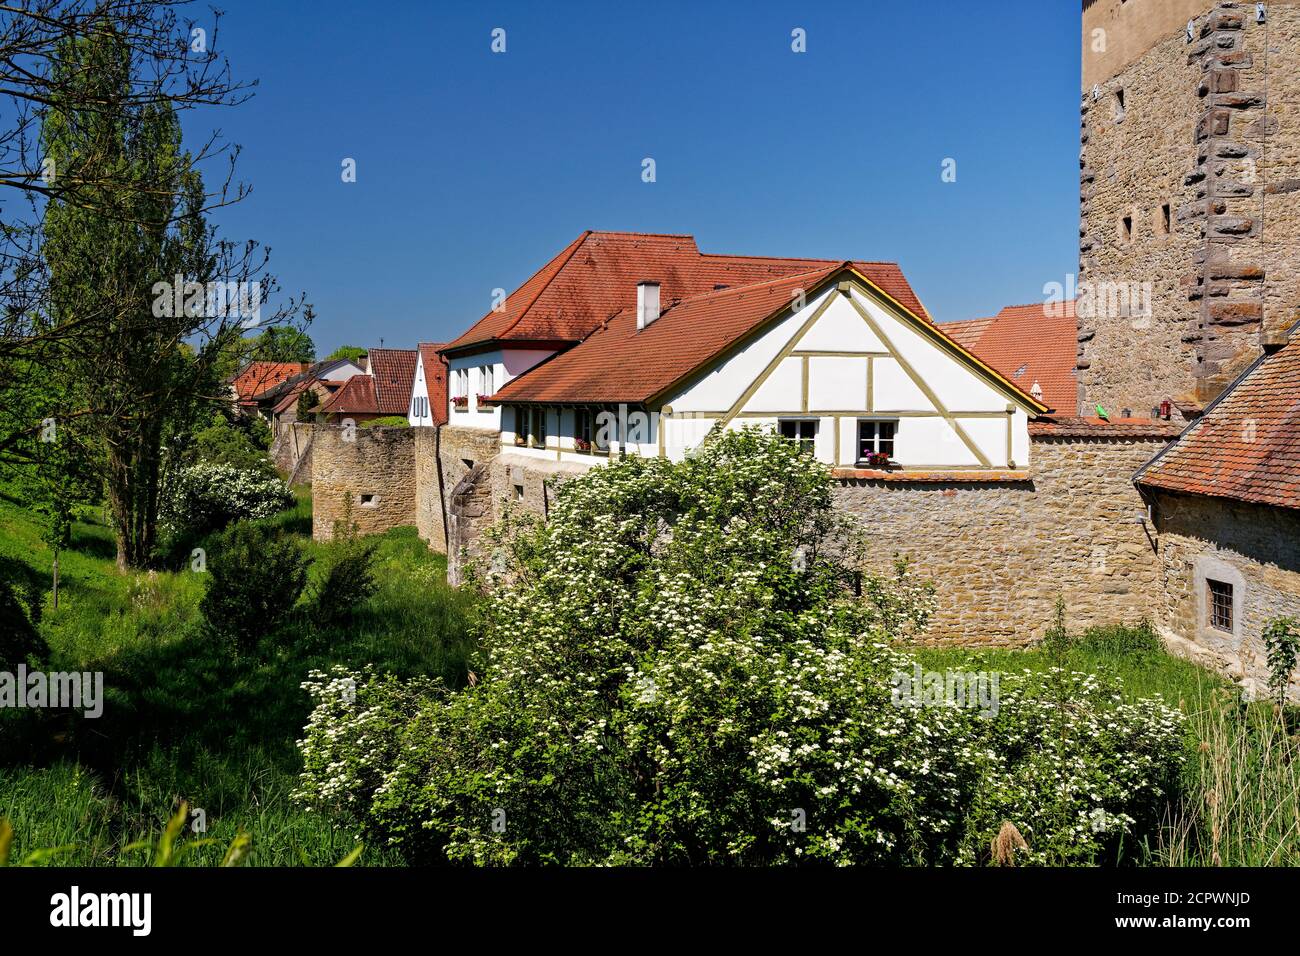 Historic center of Iphofen, Kitzingen district, Lower Franconia, Bavaria, Germany Stock Photo